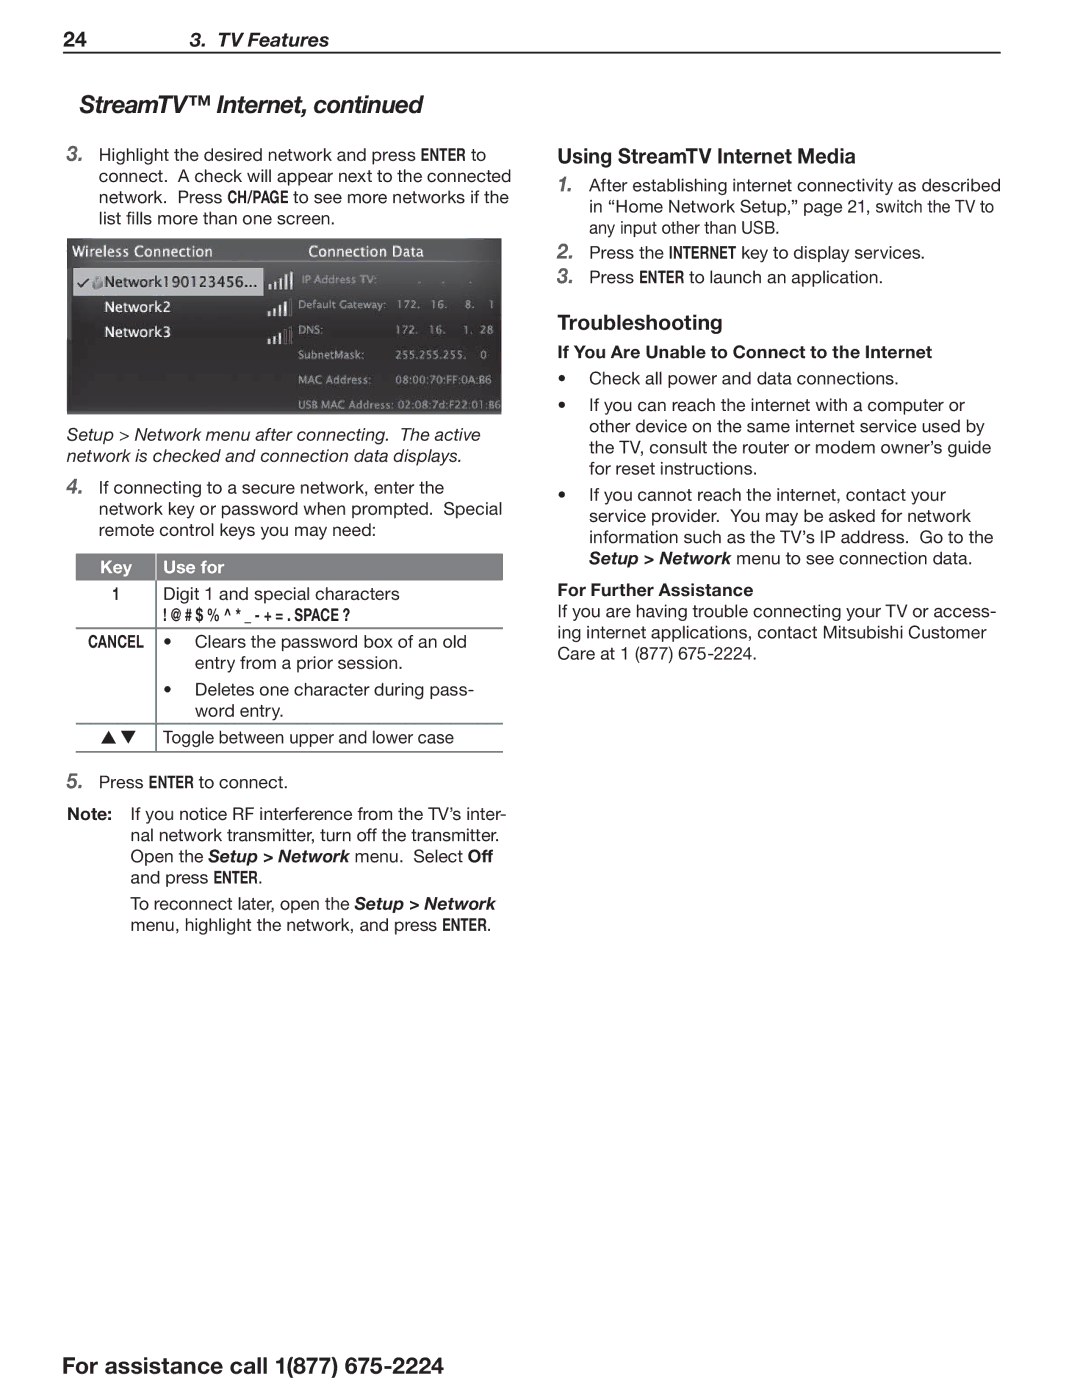 Mitsubishi Electronics L75-A94 manual Using StreamTV Internet Media, Troubleshooting, Key Use for 